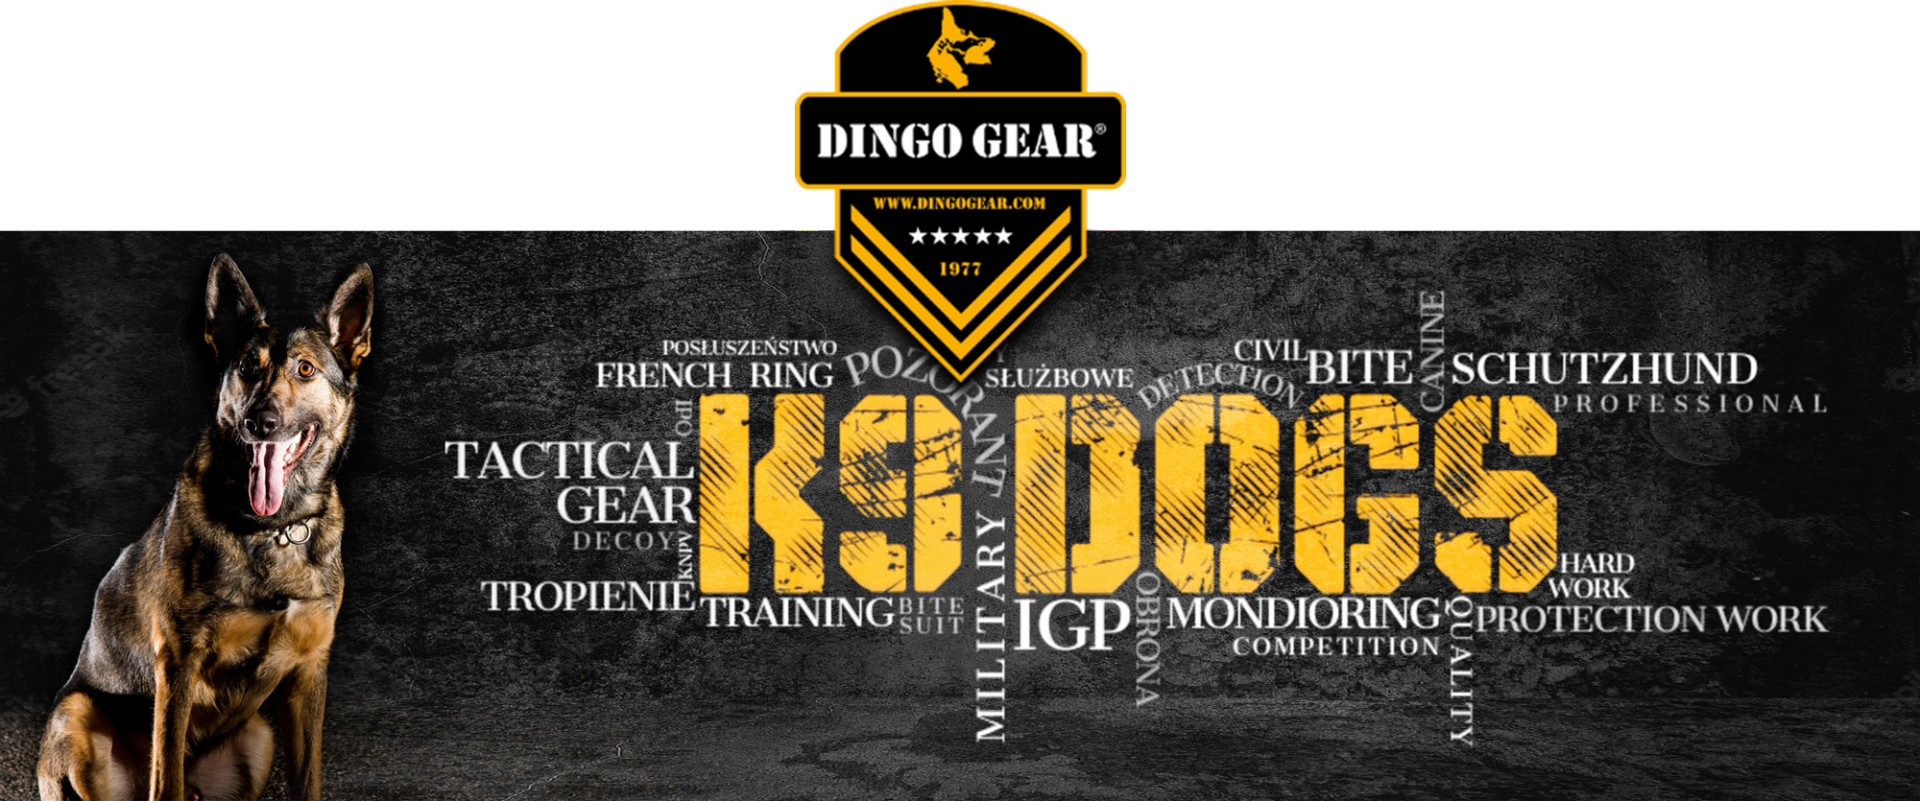 DingoGear-Header